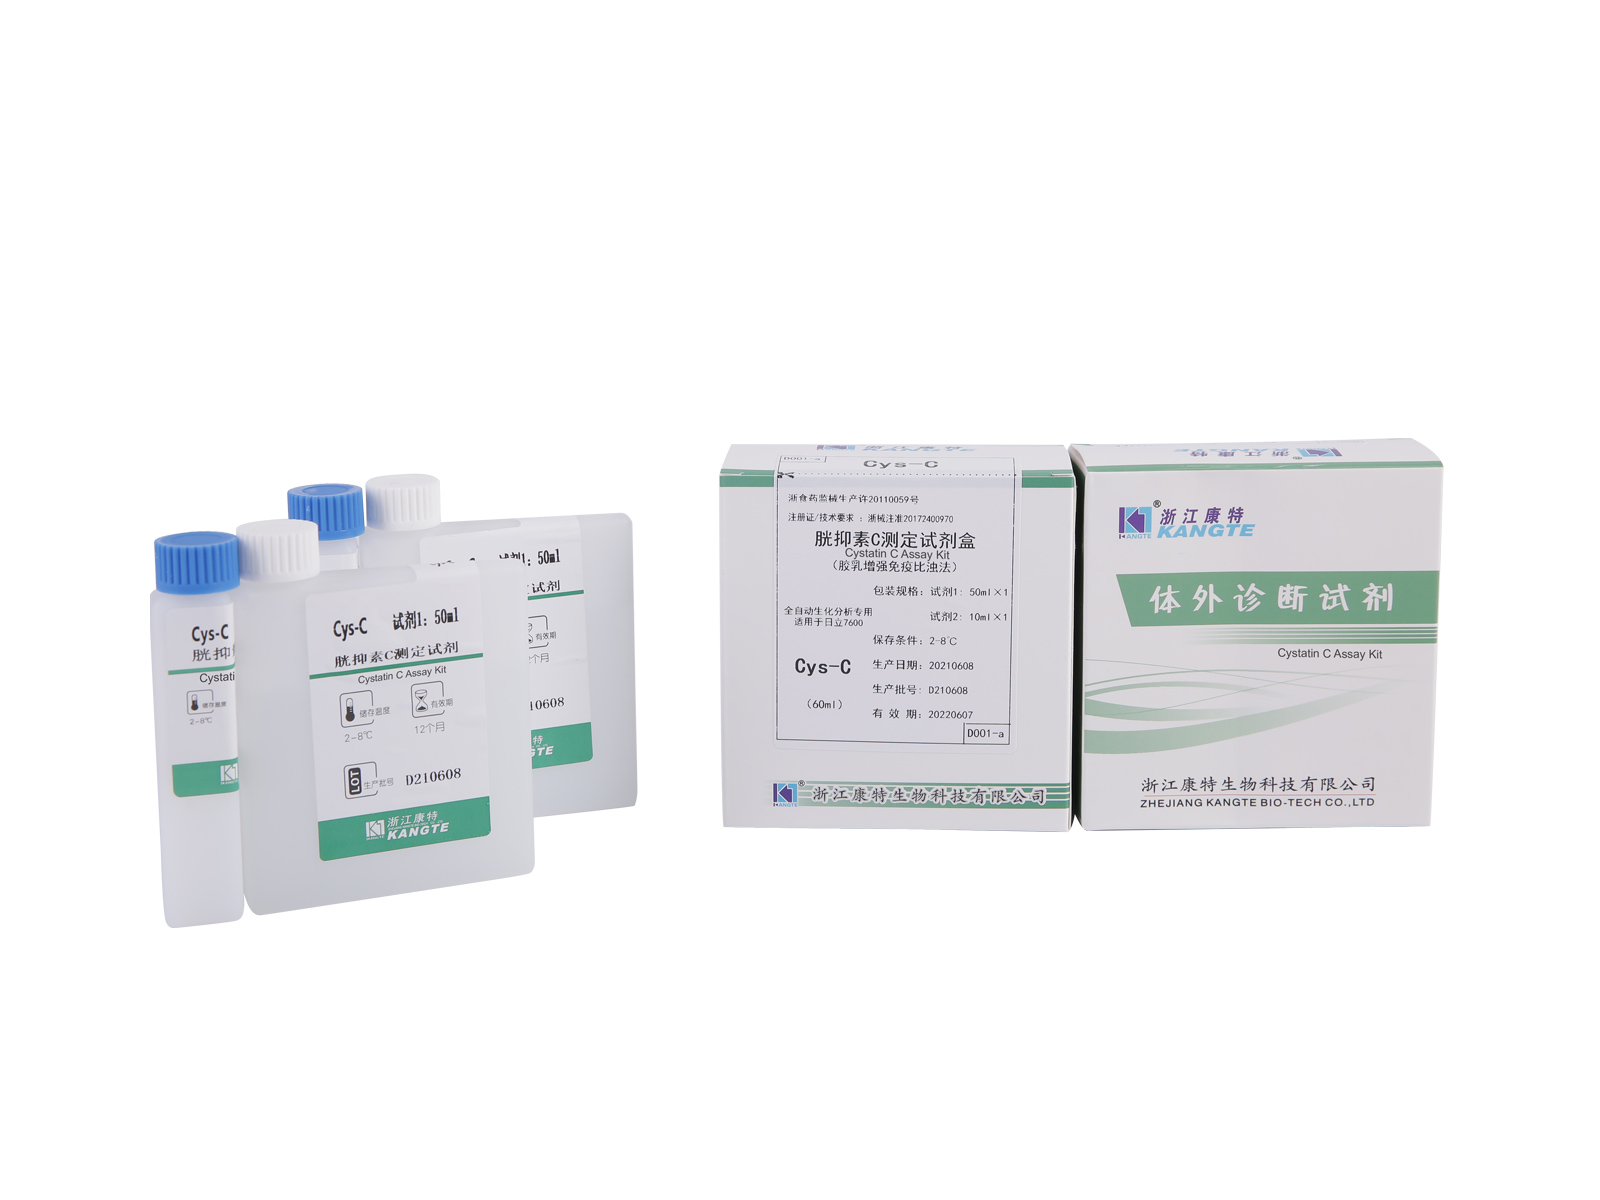 【Cys-C】Kit Uji Cystatin C (Metode Imunoturbidimetri Lateks yang Ditingkatkan)